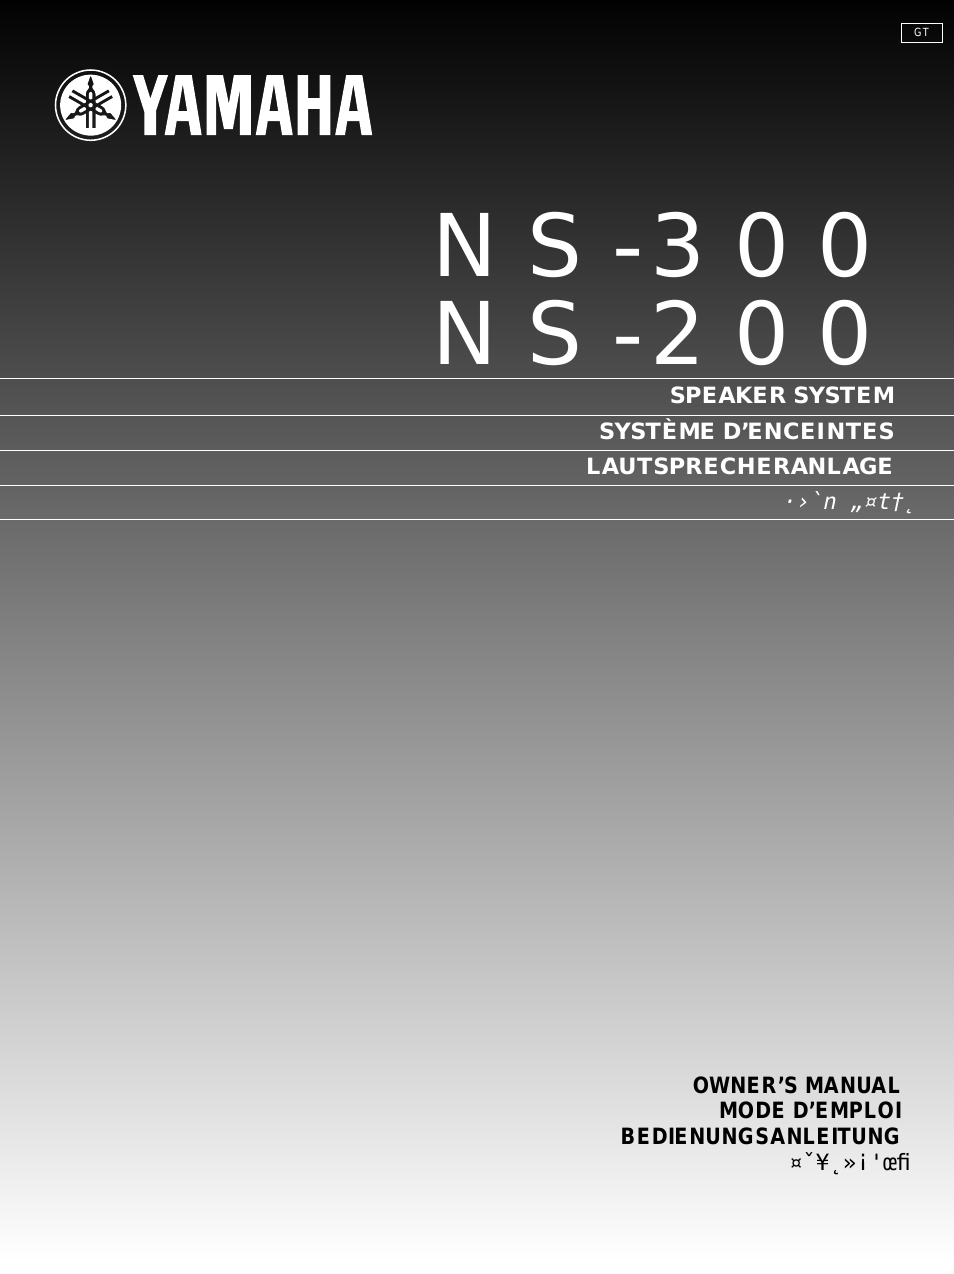 NS-300